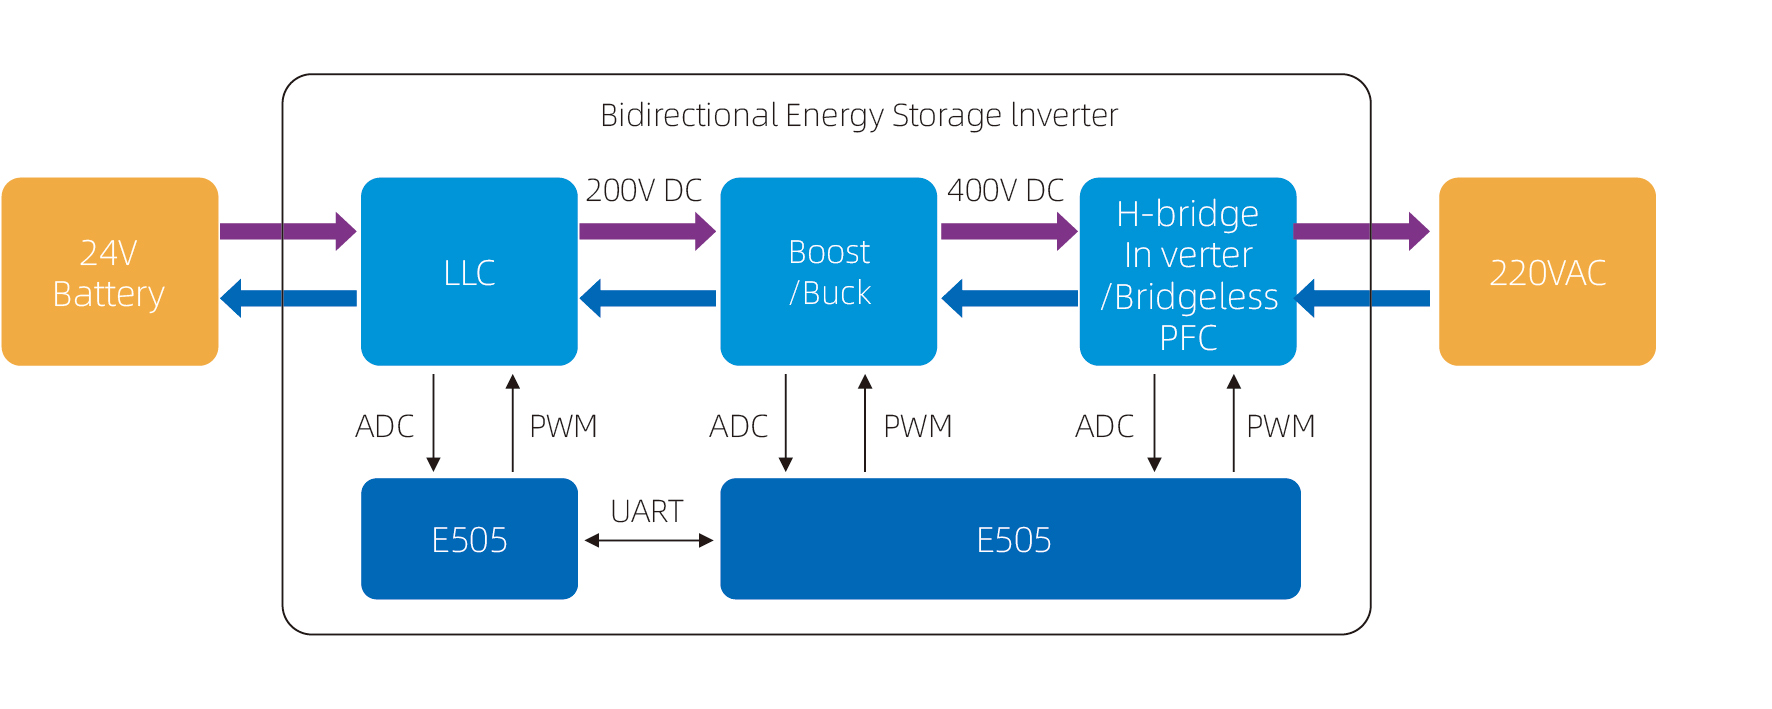 bidirectional-energy-storage-lnverter.jpg